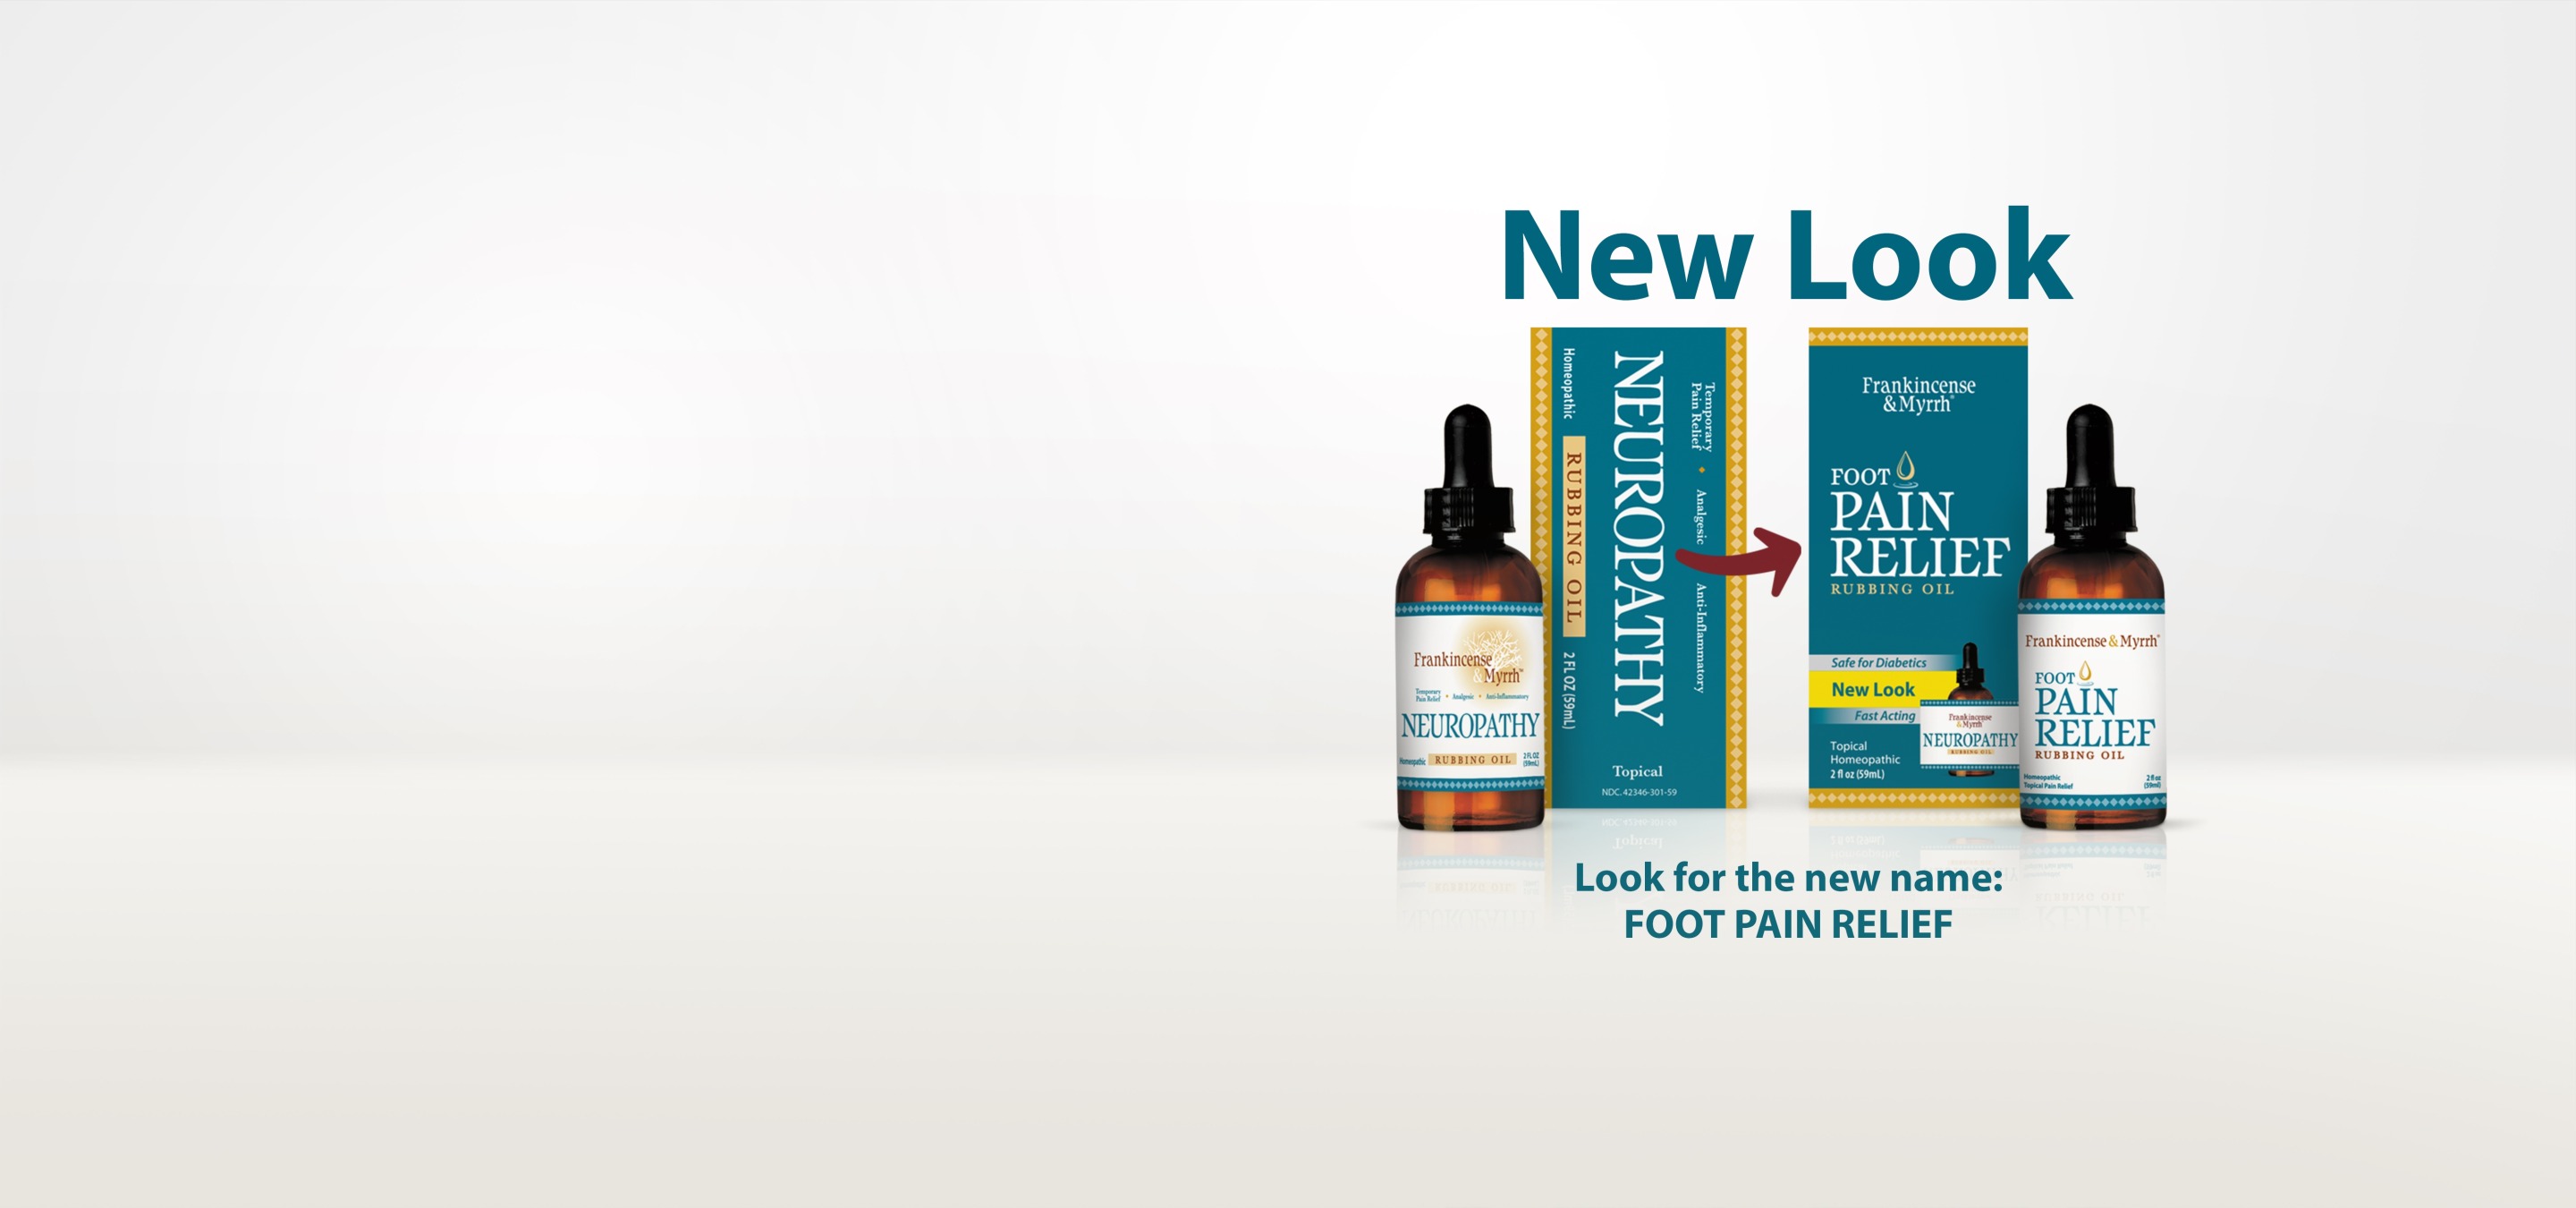 Frankincense & Myrrh Foot Pain Relief - Neuropathy Rubbing Oil, 2fl oz